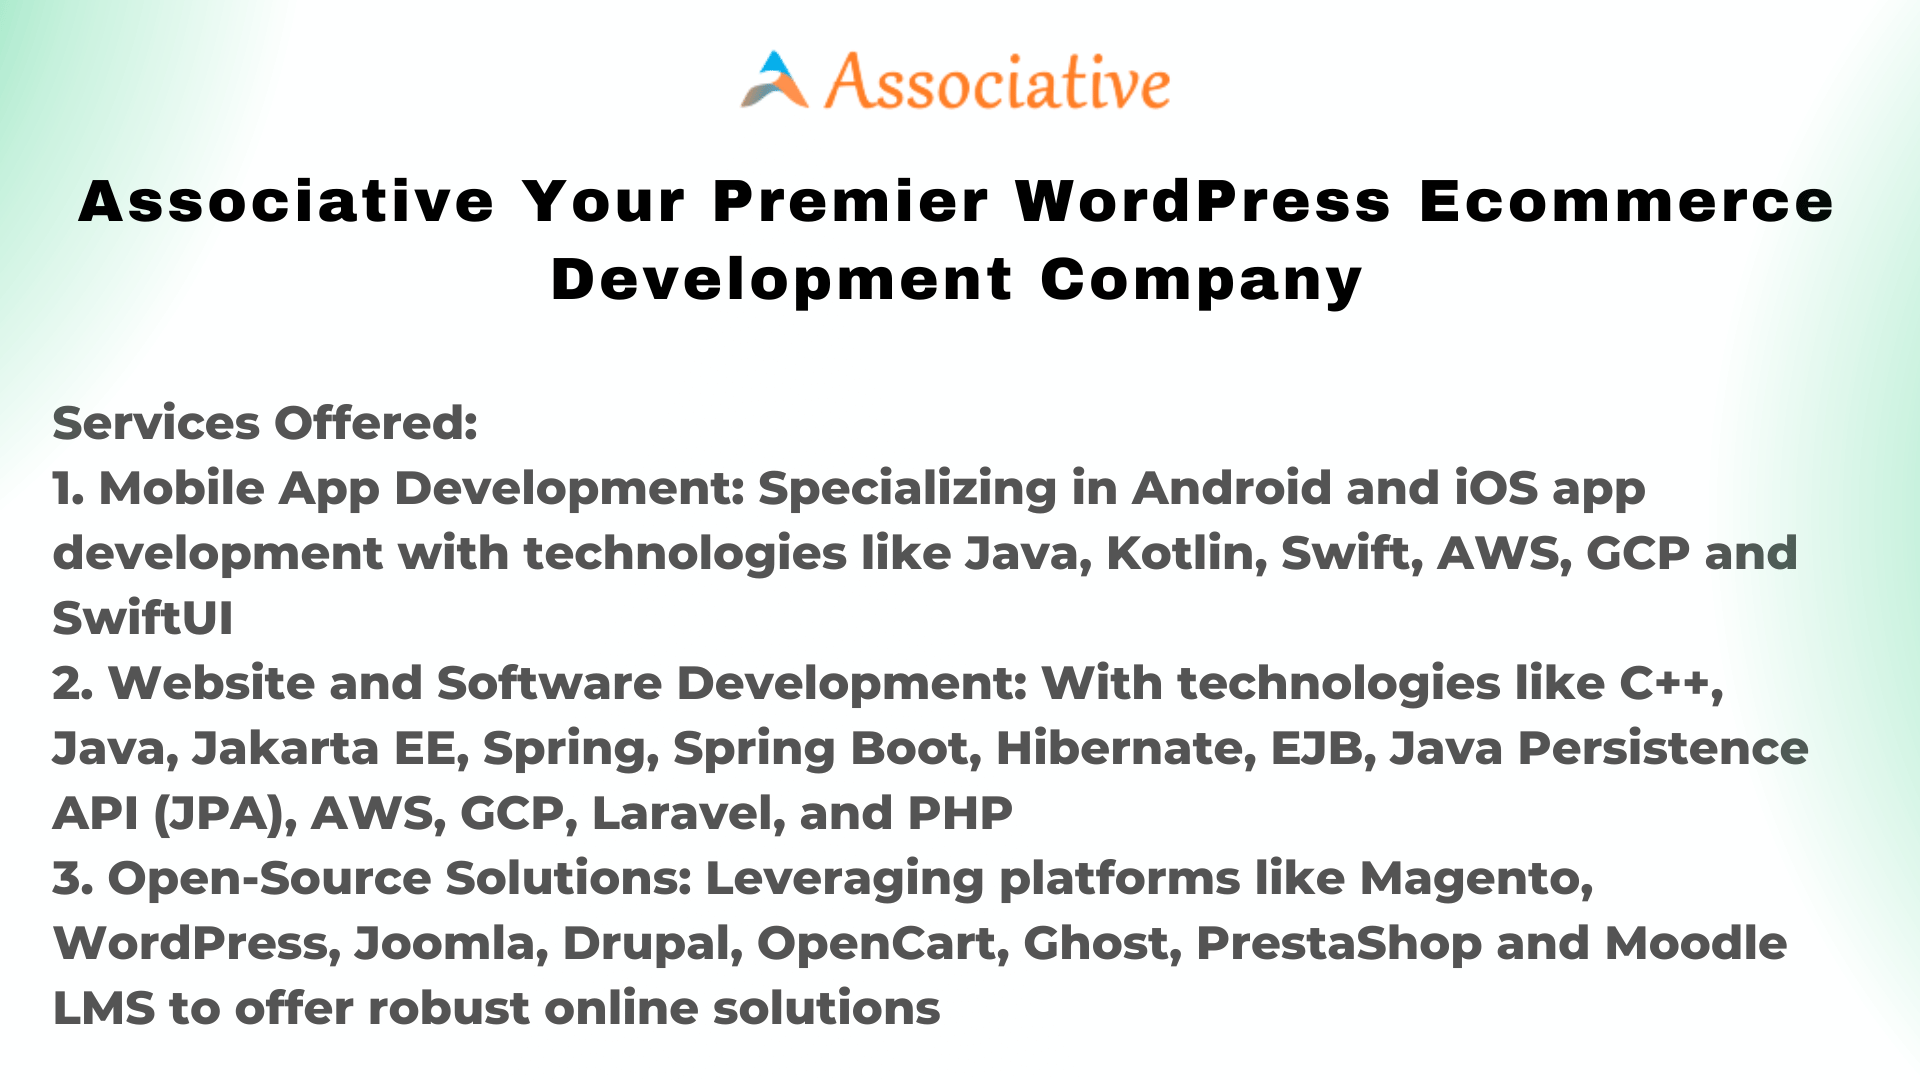 Associative Your Premier WordPress Ecommerce Development Company